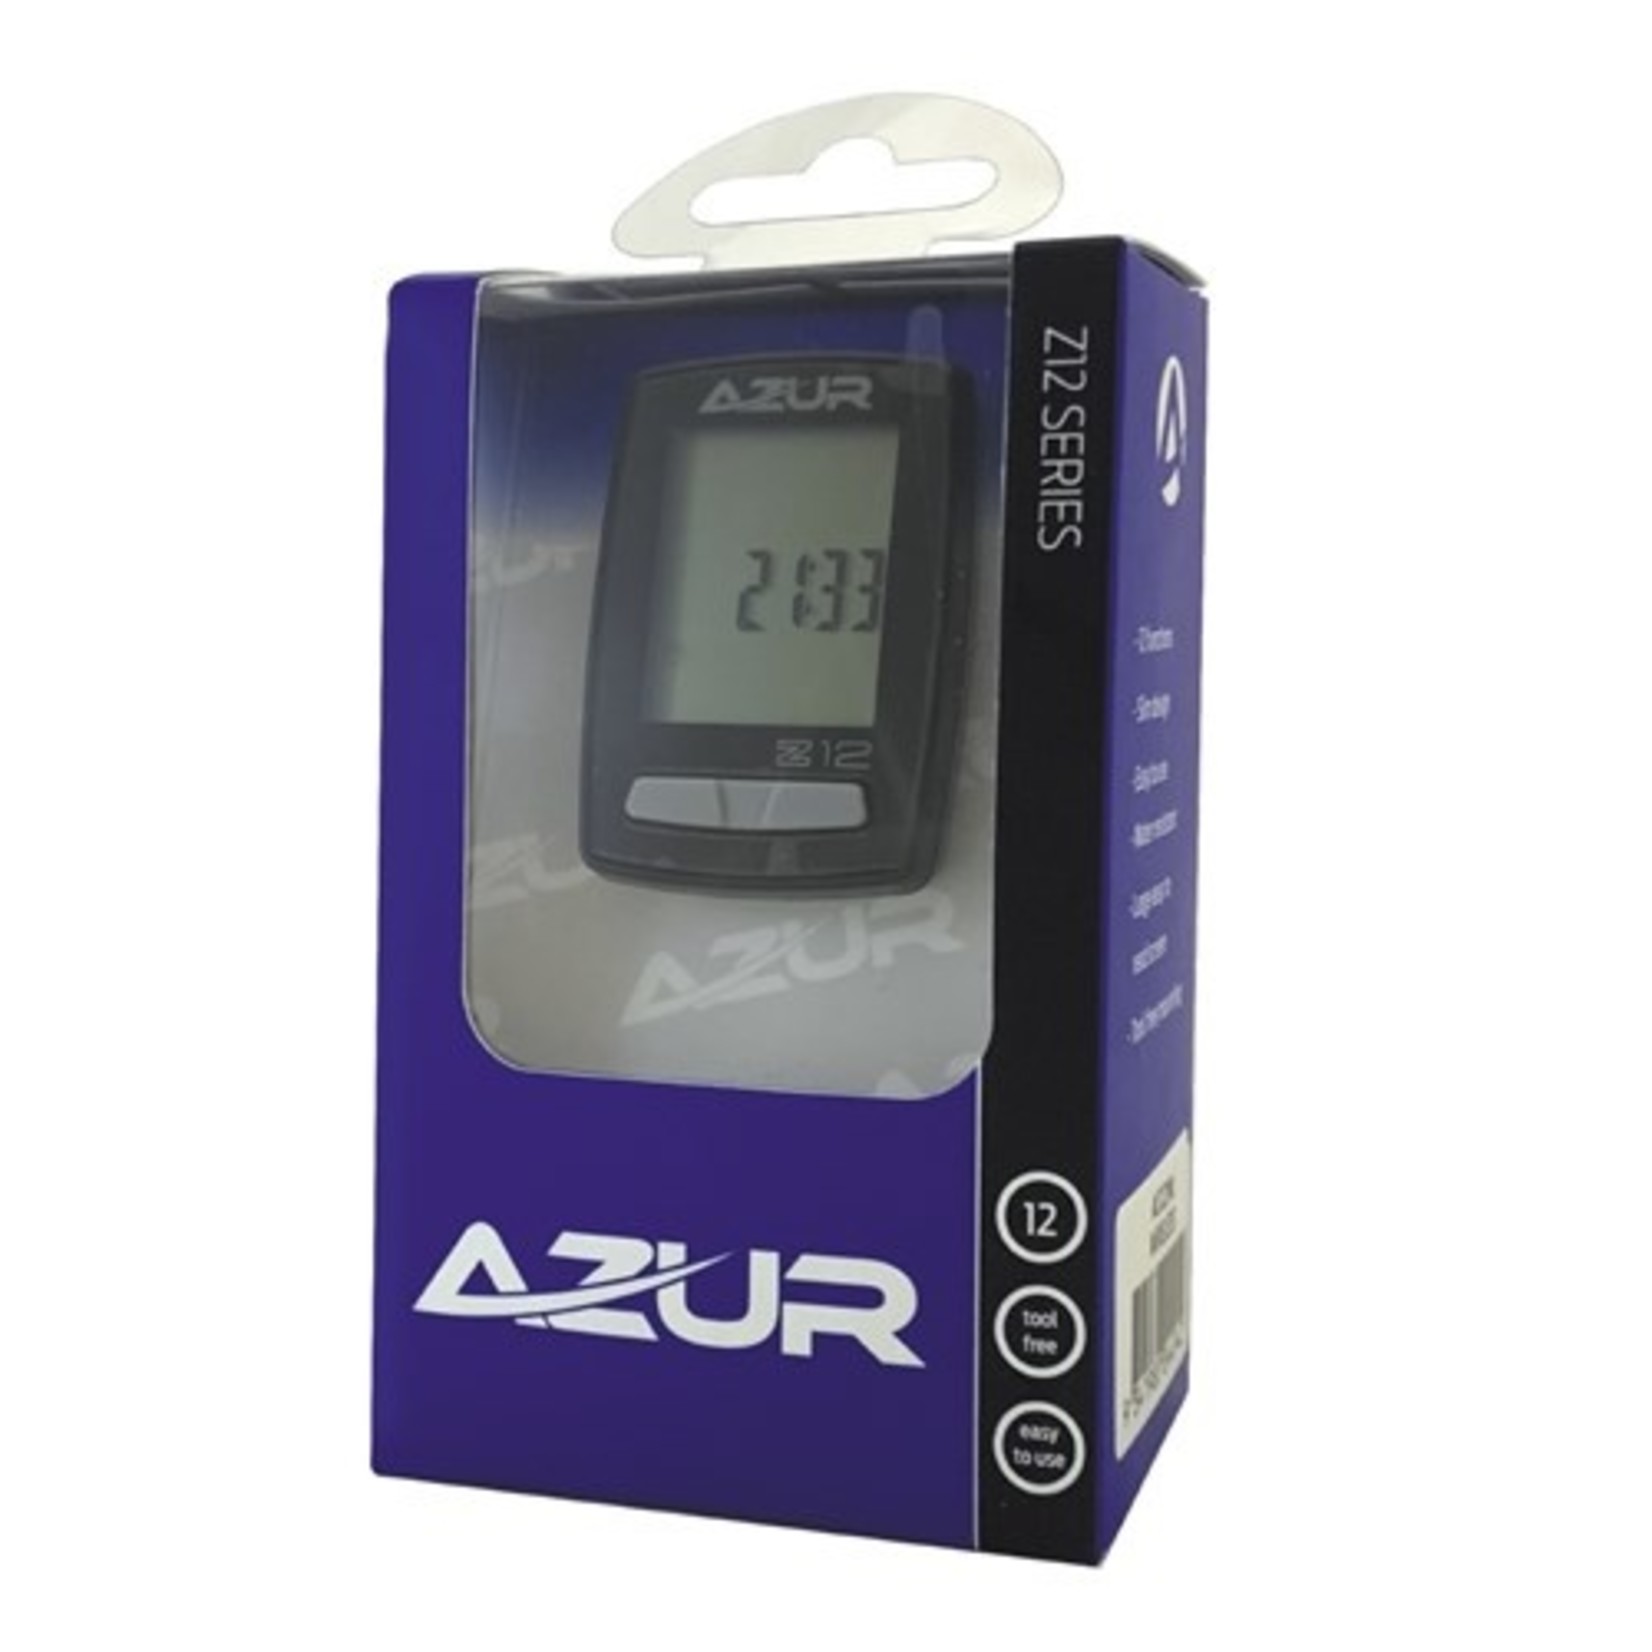 Azur Azur Bike/Cycling 12Z Bike Computer - Wireless - 12 Function